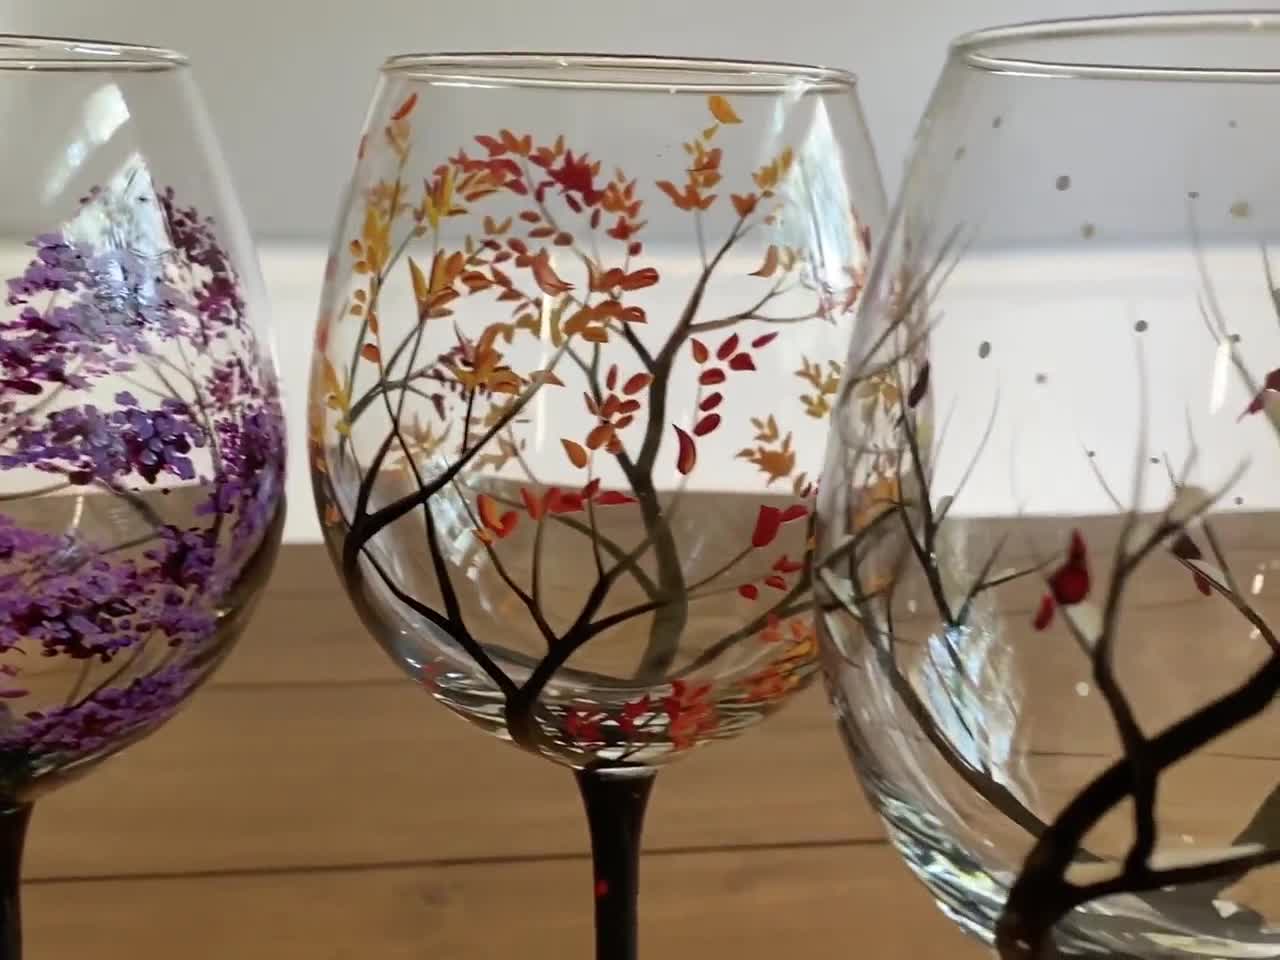 Four Seasons Tree Wine Glasses Spring Summer Winter Fall Set of